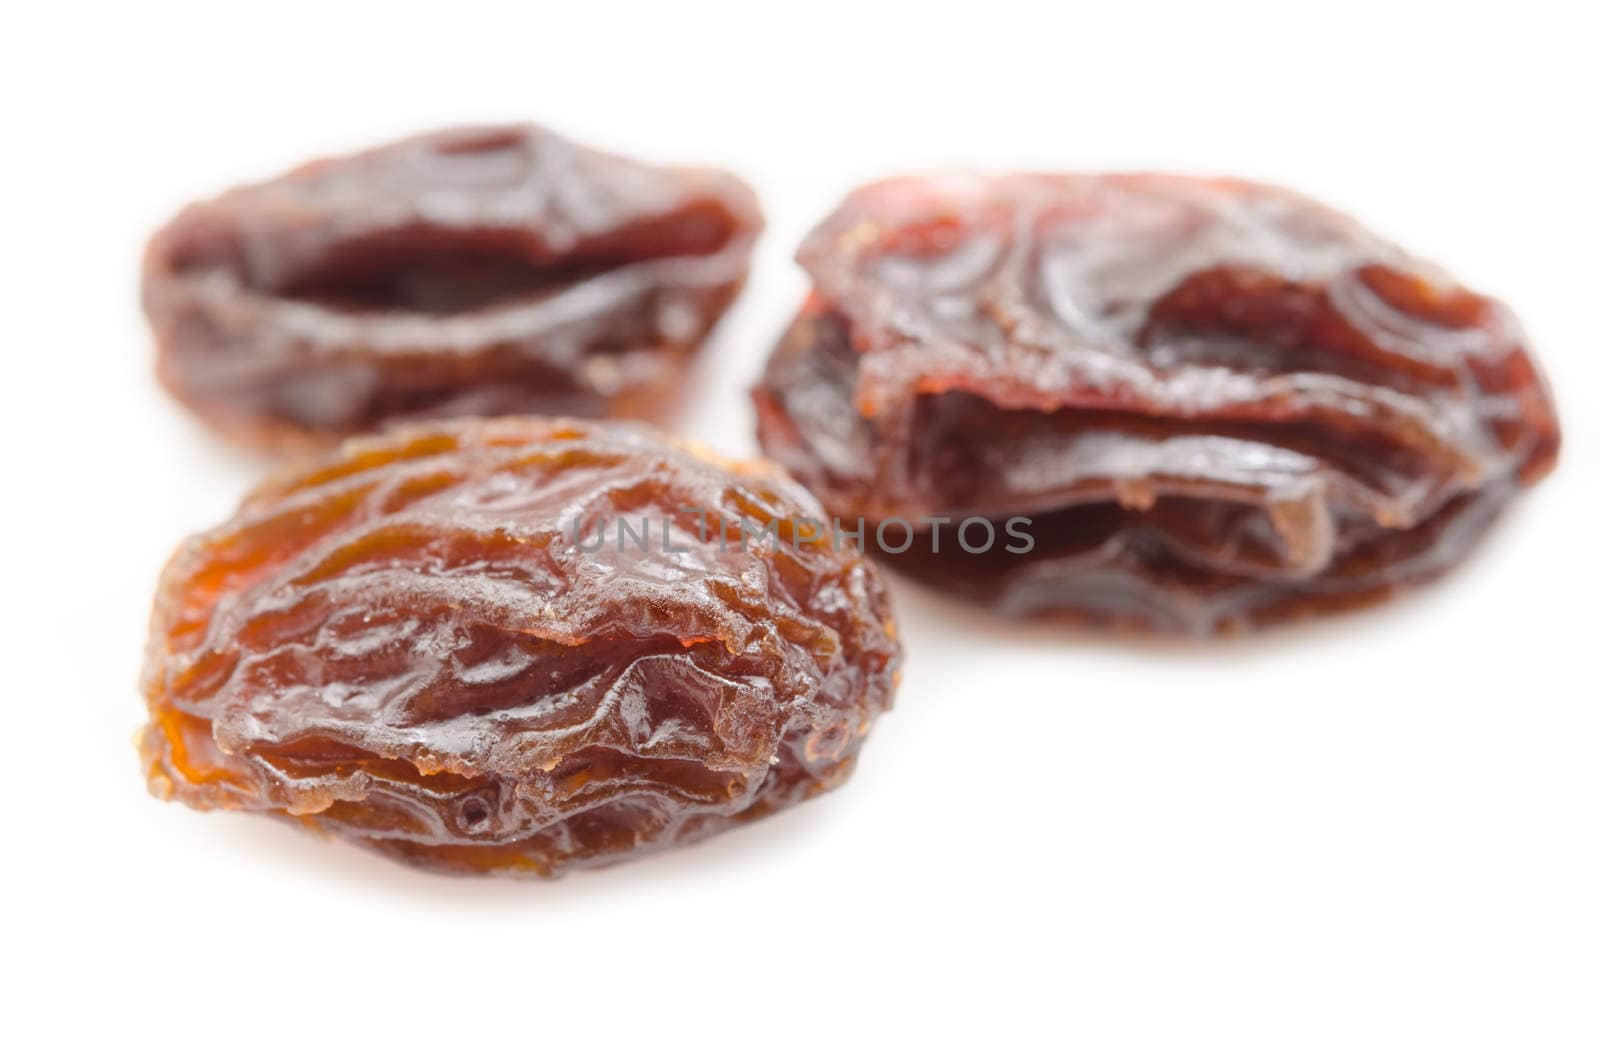 Close up of Raisins on whtie background.